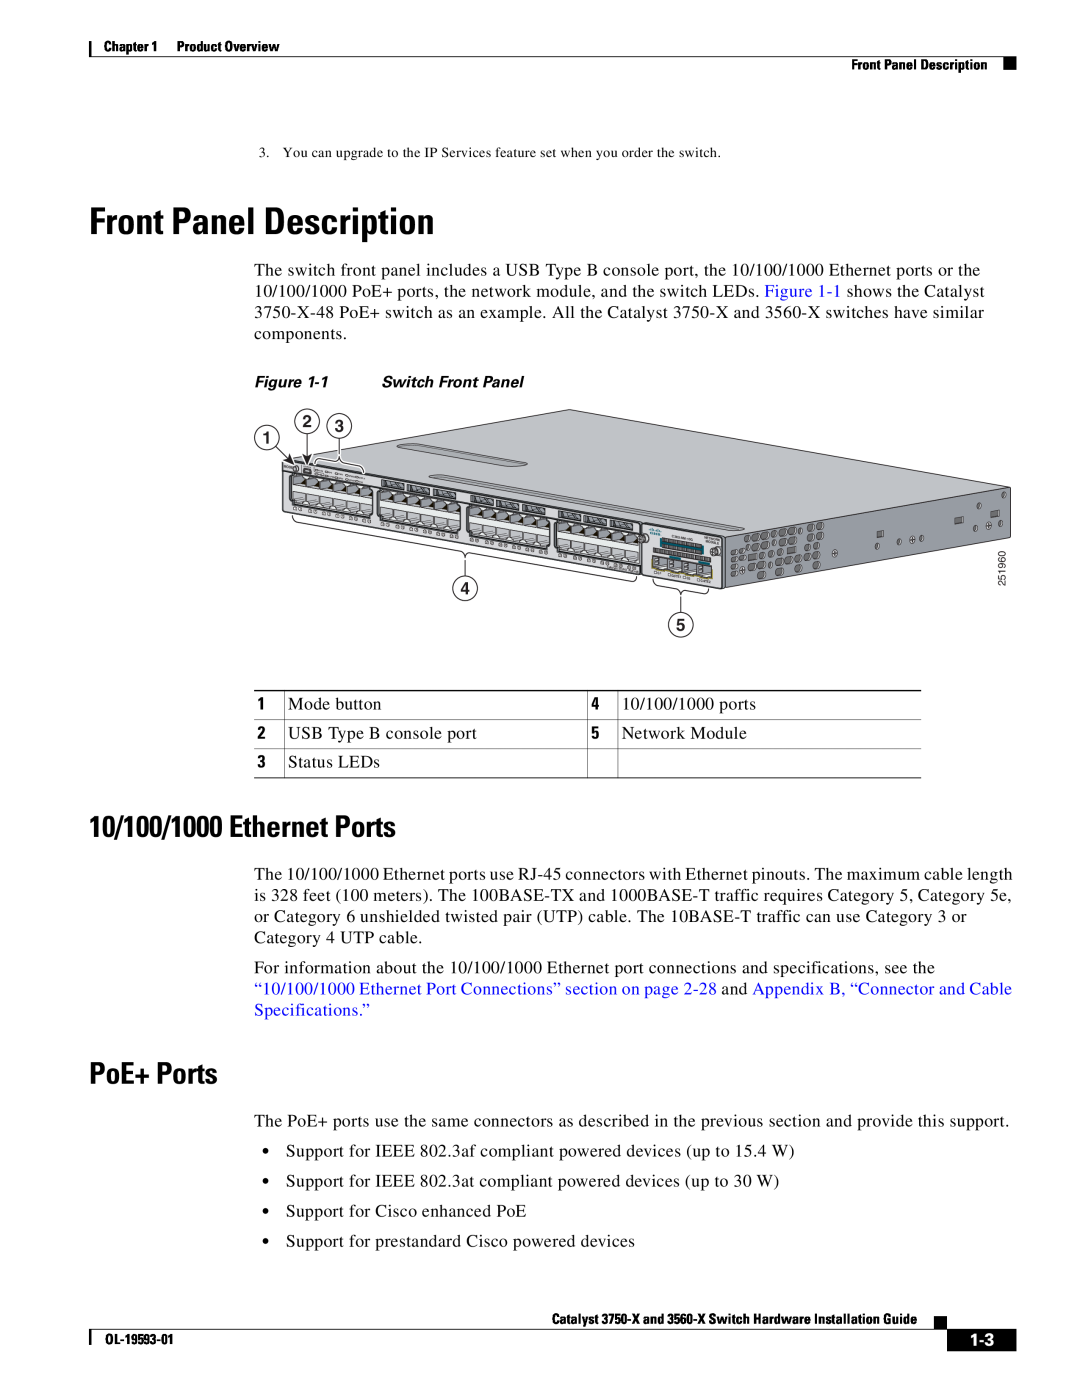 Cisco Systems 3560-X, 3750-X manual Front Panel Description, 10/100/1000 Ethernet Ports, PoE+ Ports 